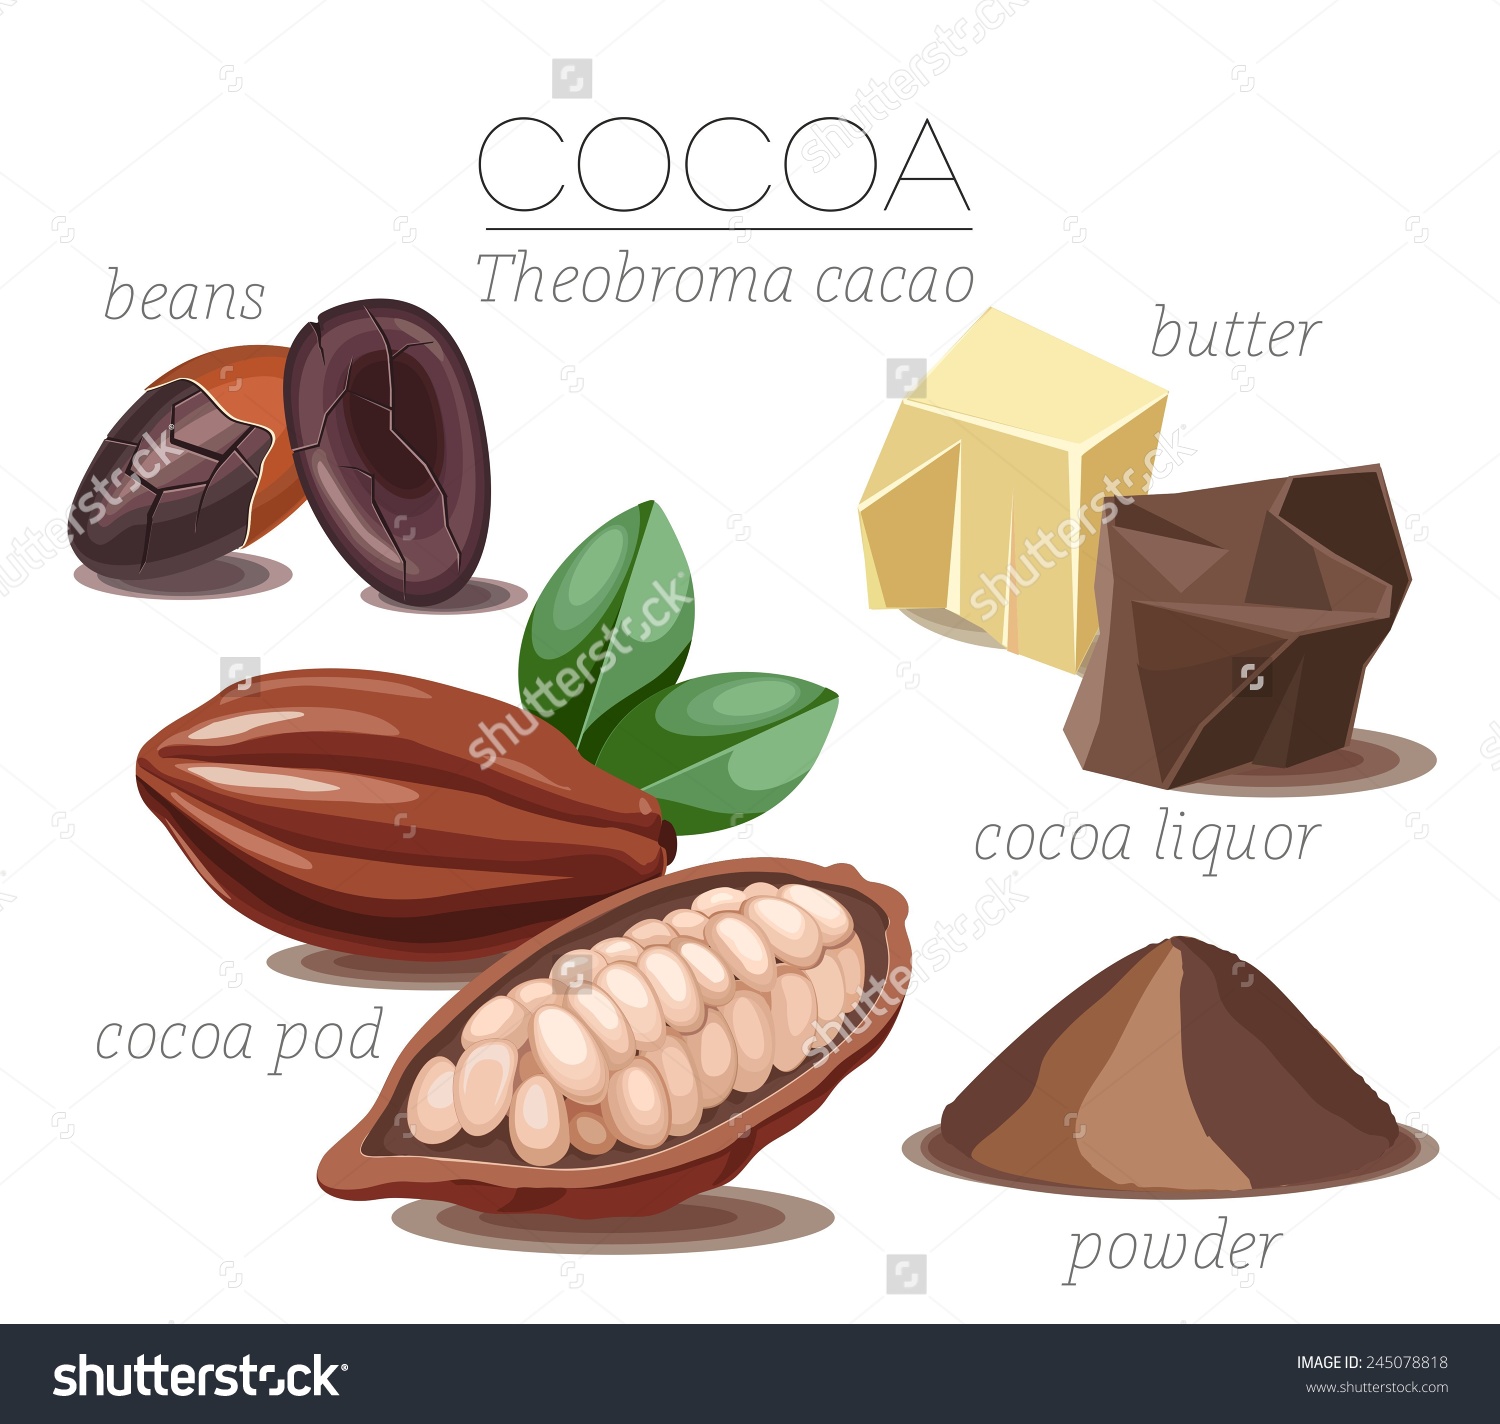 butter clipart cocoa butter